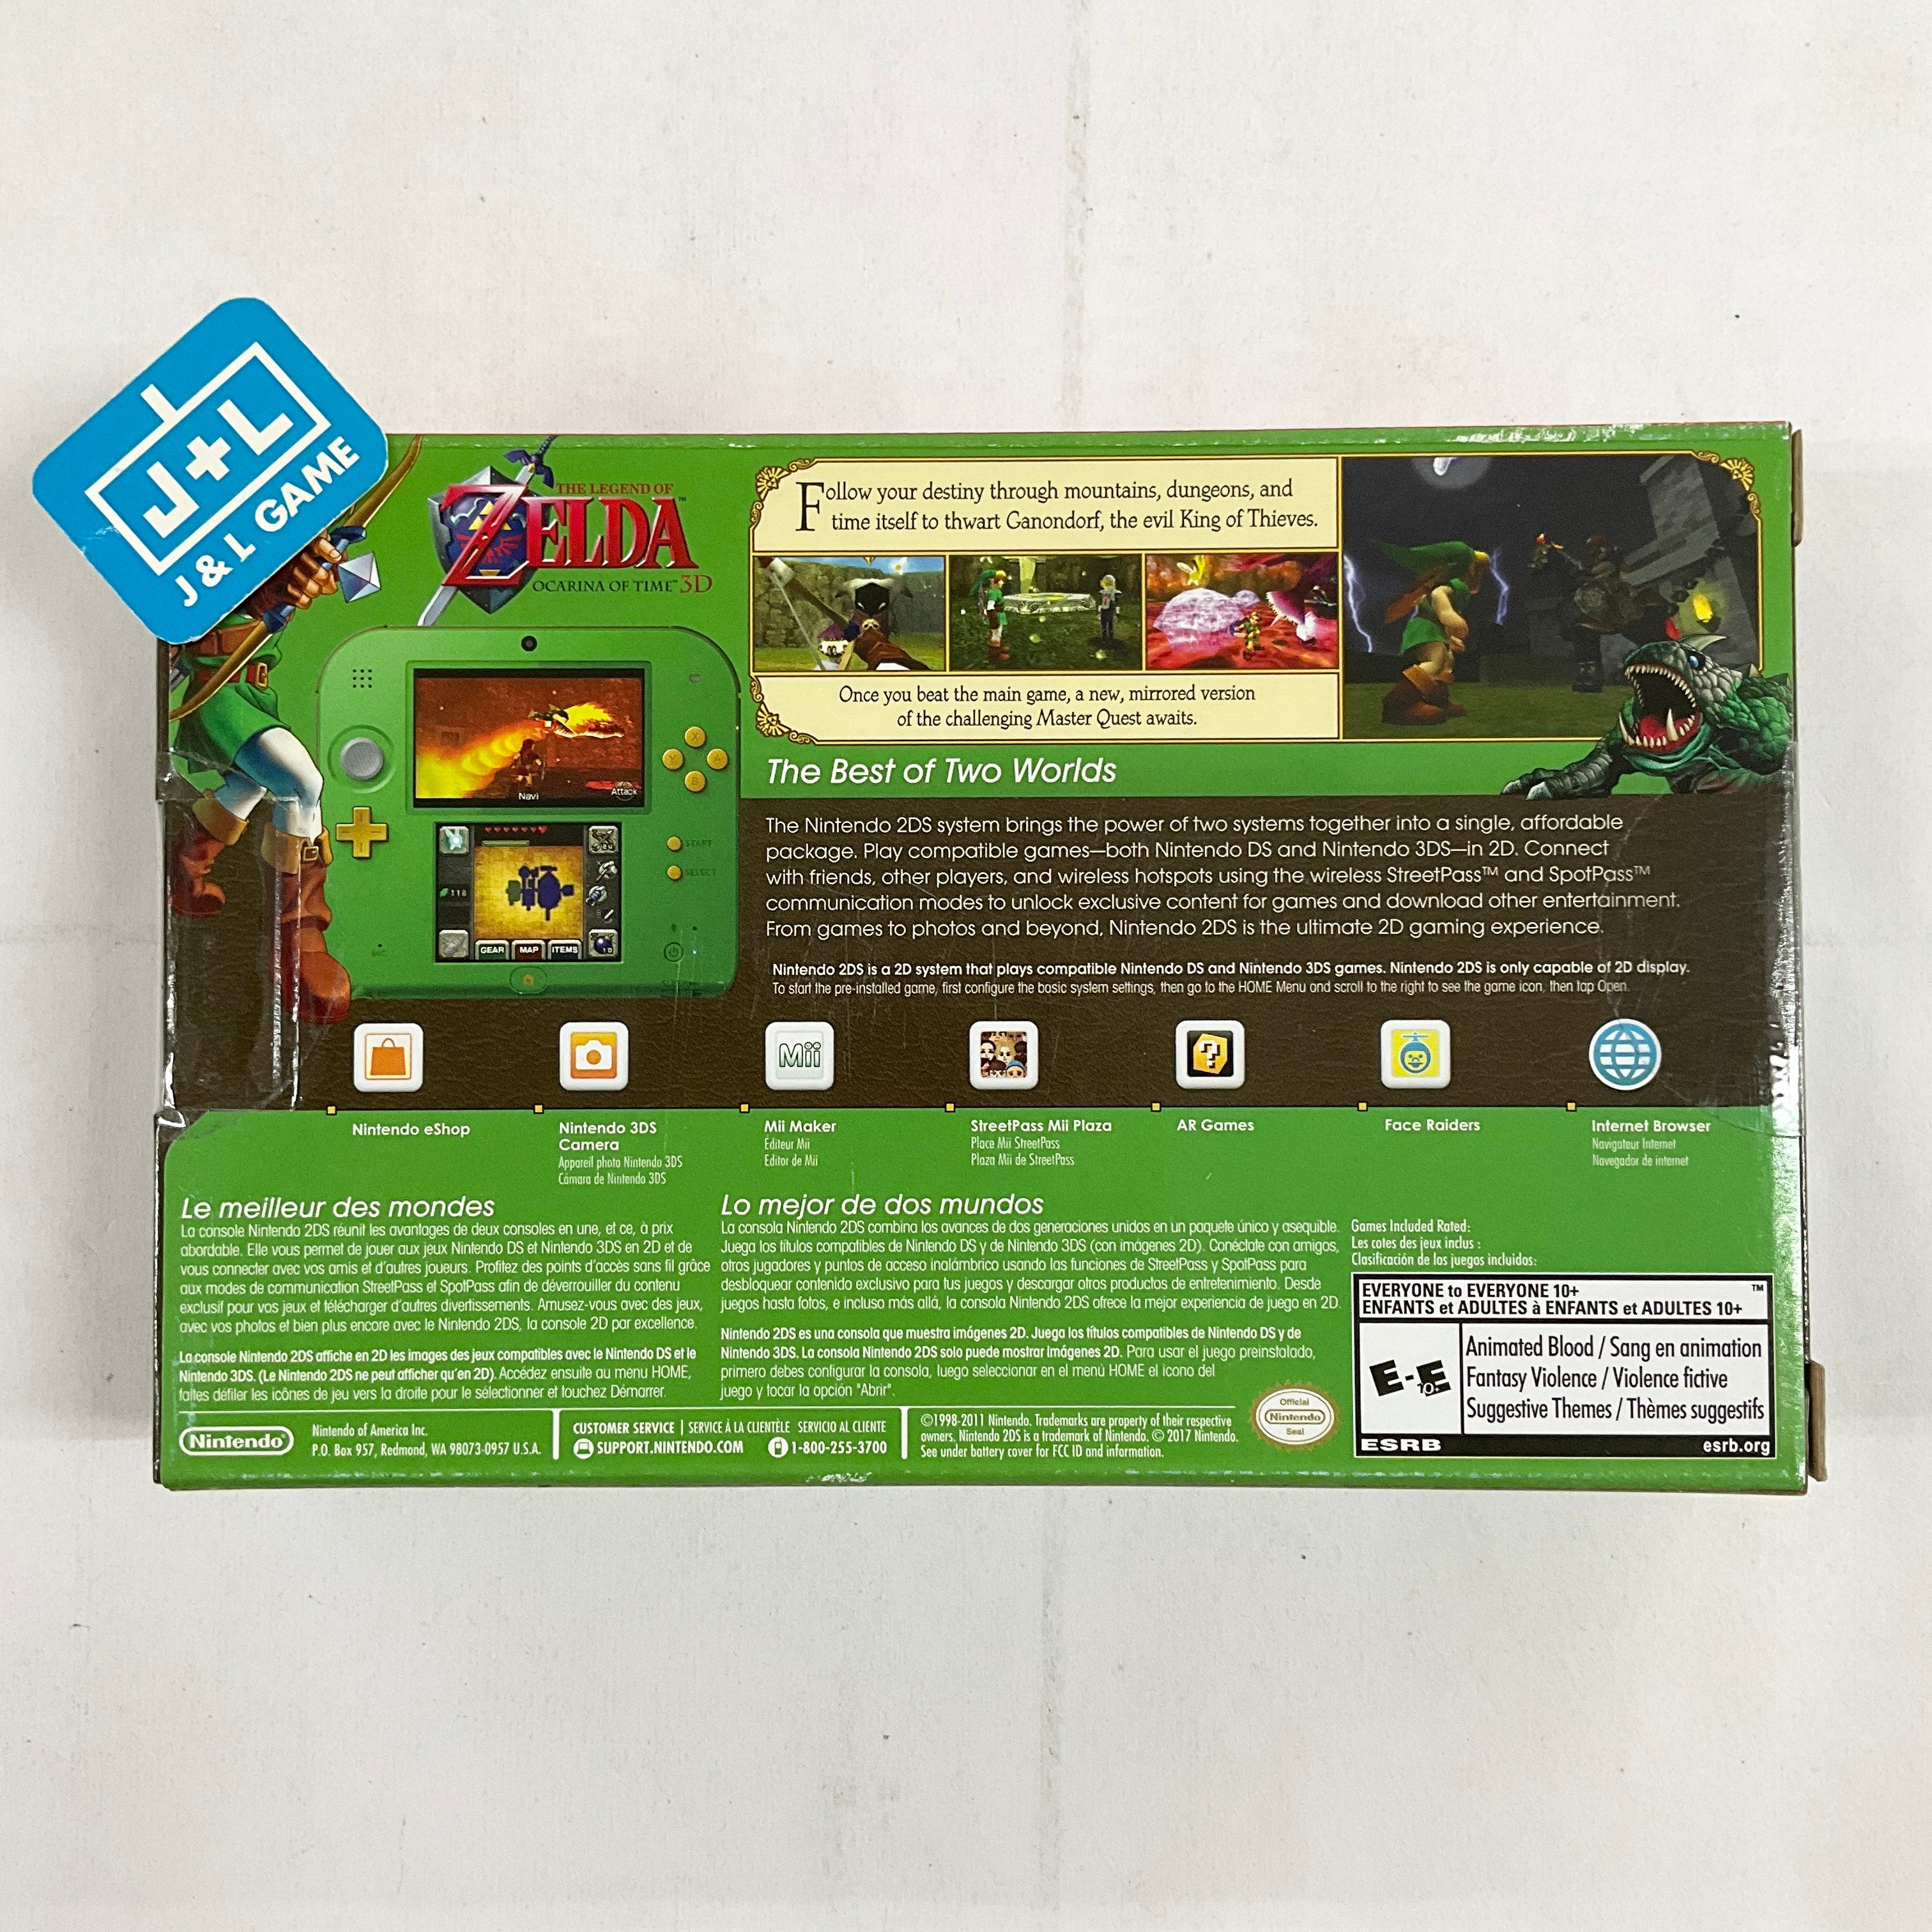 Nintendo 2DS Console - Legend of Zelda Ocarina of Time 3D - Nintendo 3DS Consoles Nintendo   